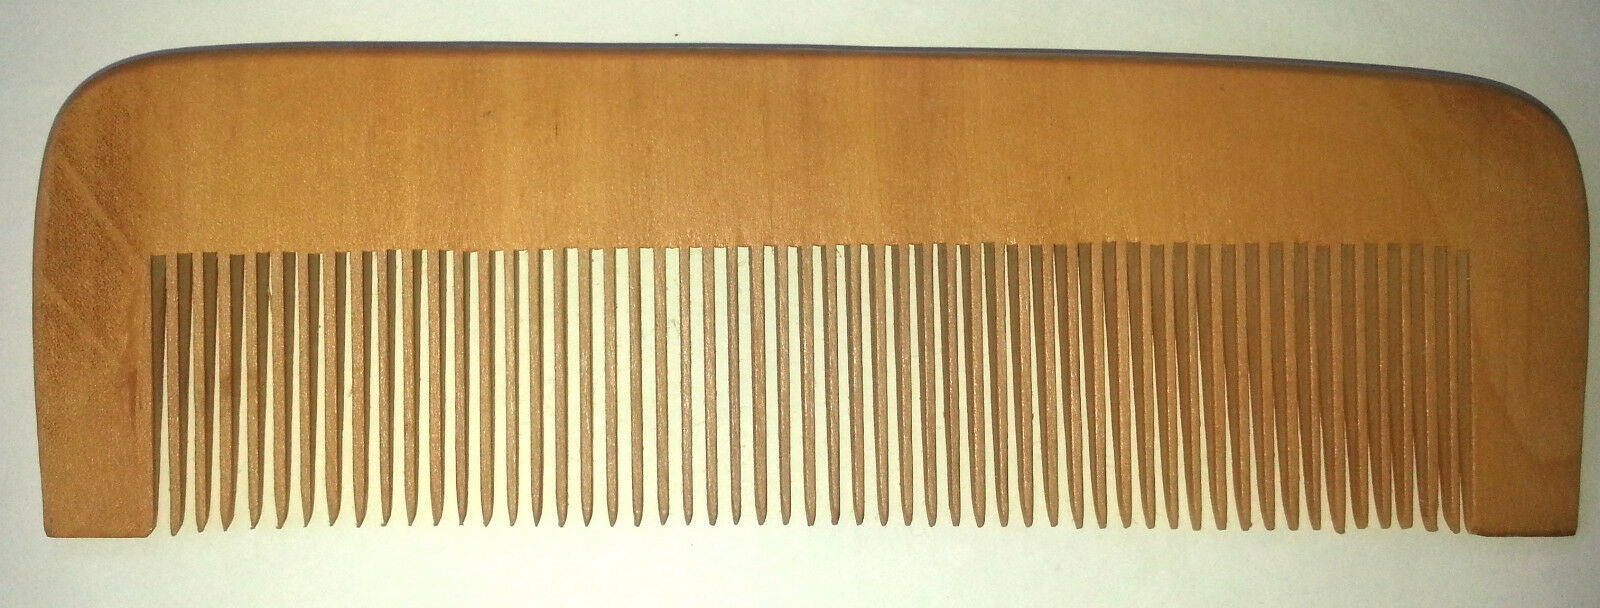 Sikh Kanga Khalsa Singh Wooden Comb - Premium Quality Wooden Combs - New Design